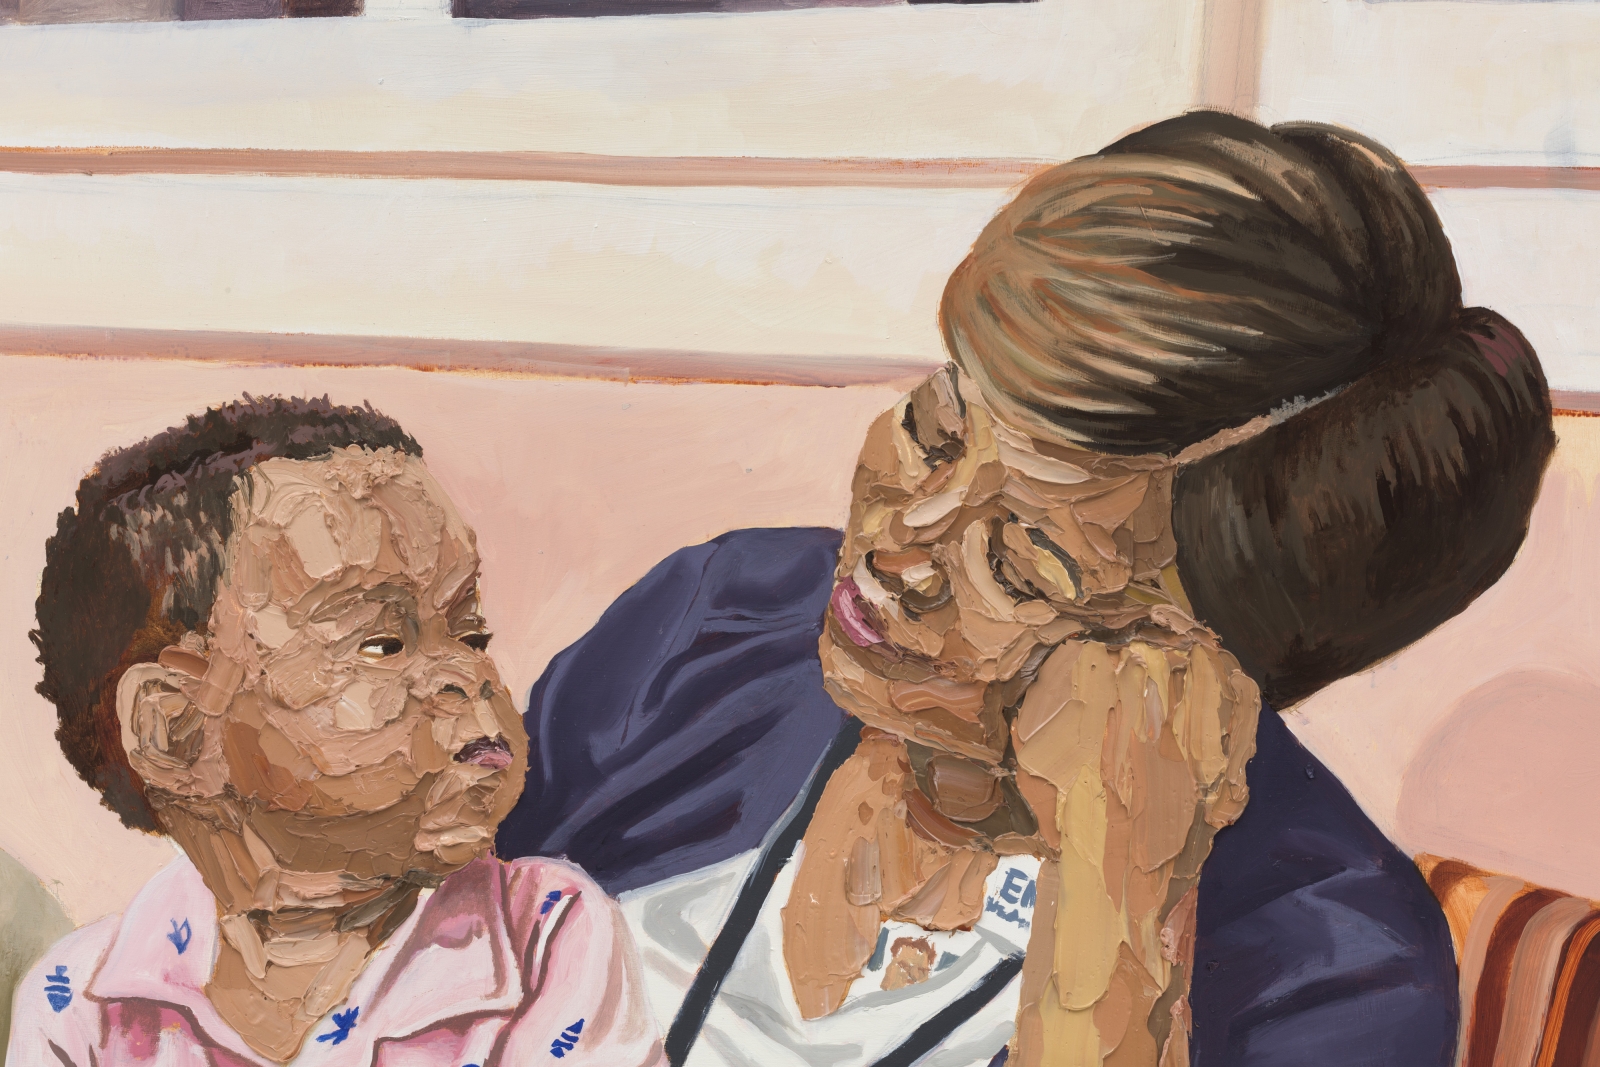 Gerald Lovell
Logan and Tara, 2020 (detail)
oil on panel
40 x 30 ins.
101.6 x 76.2 cm